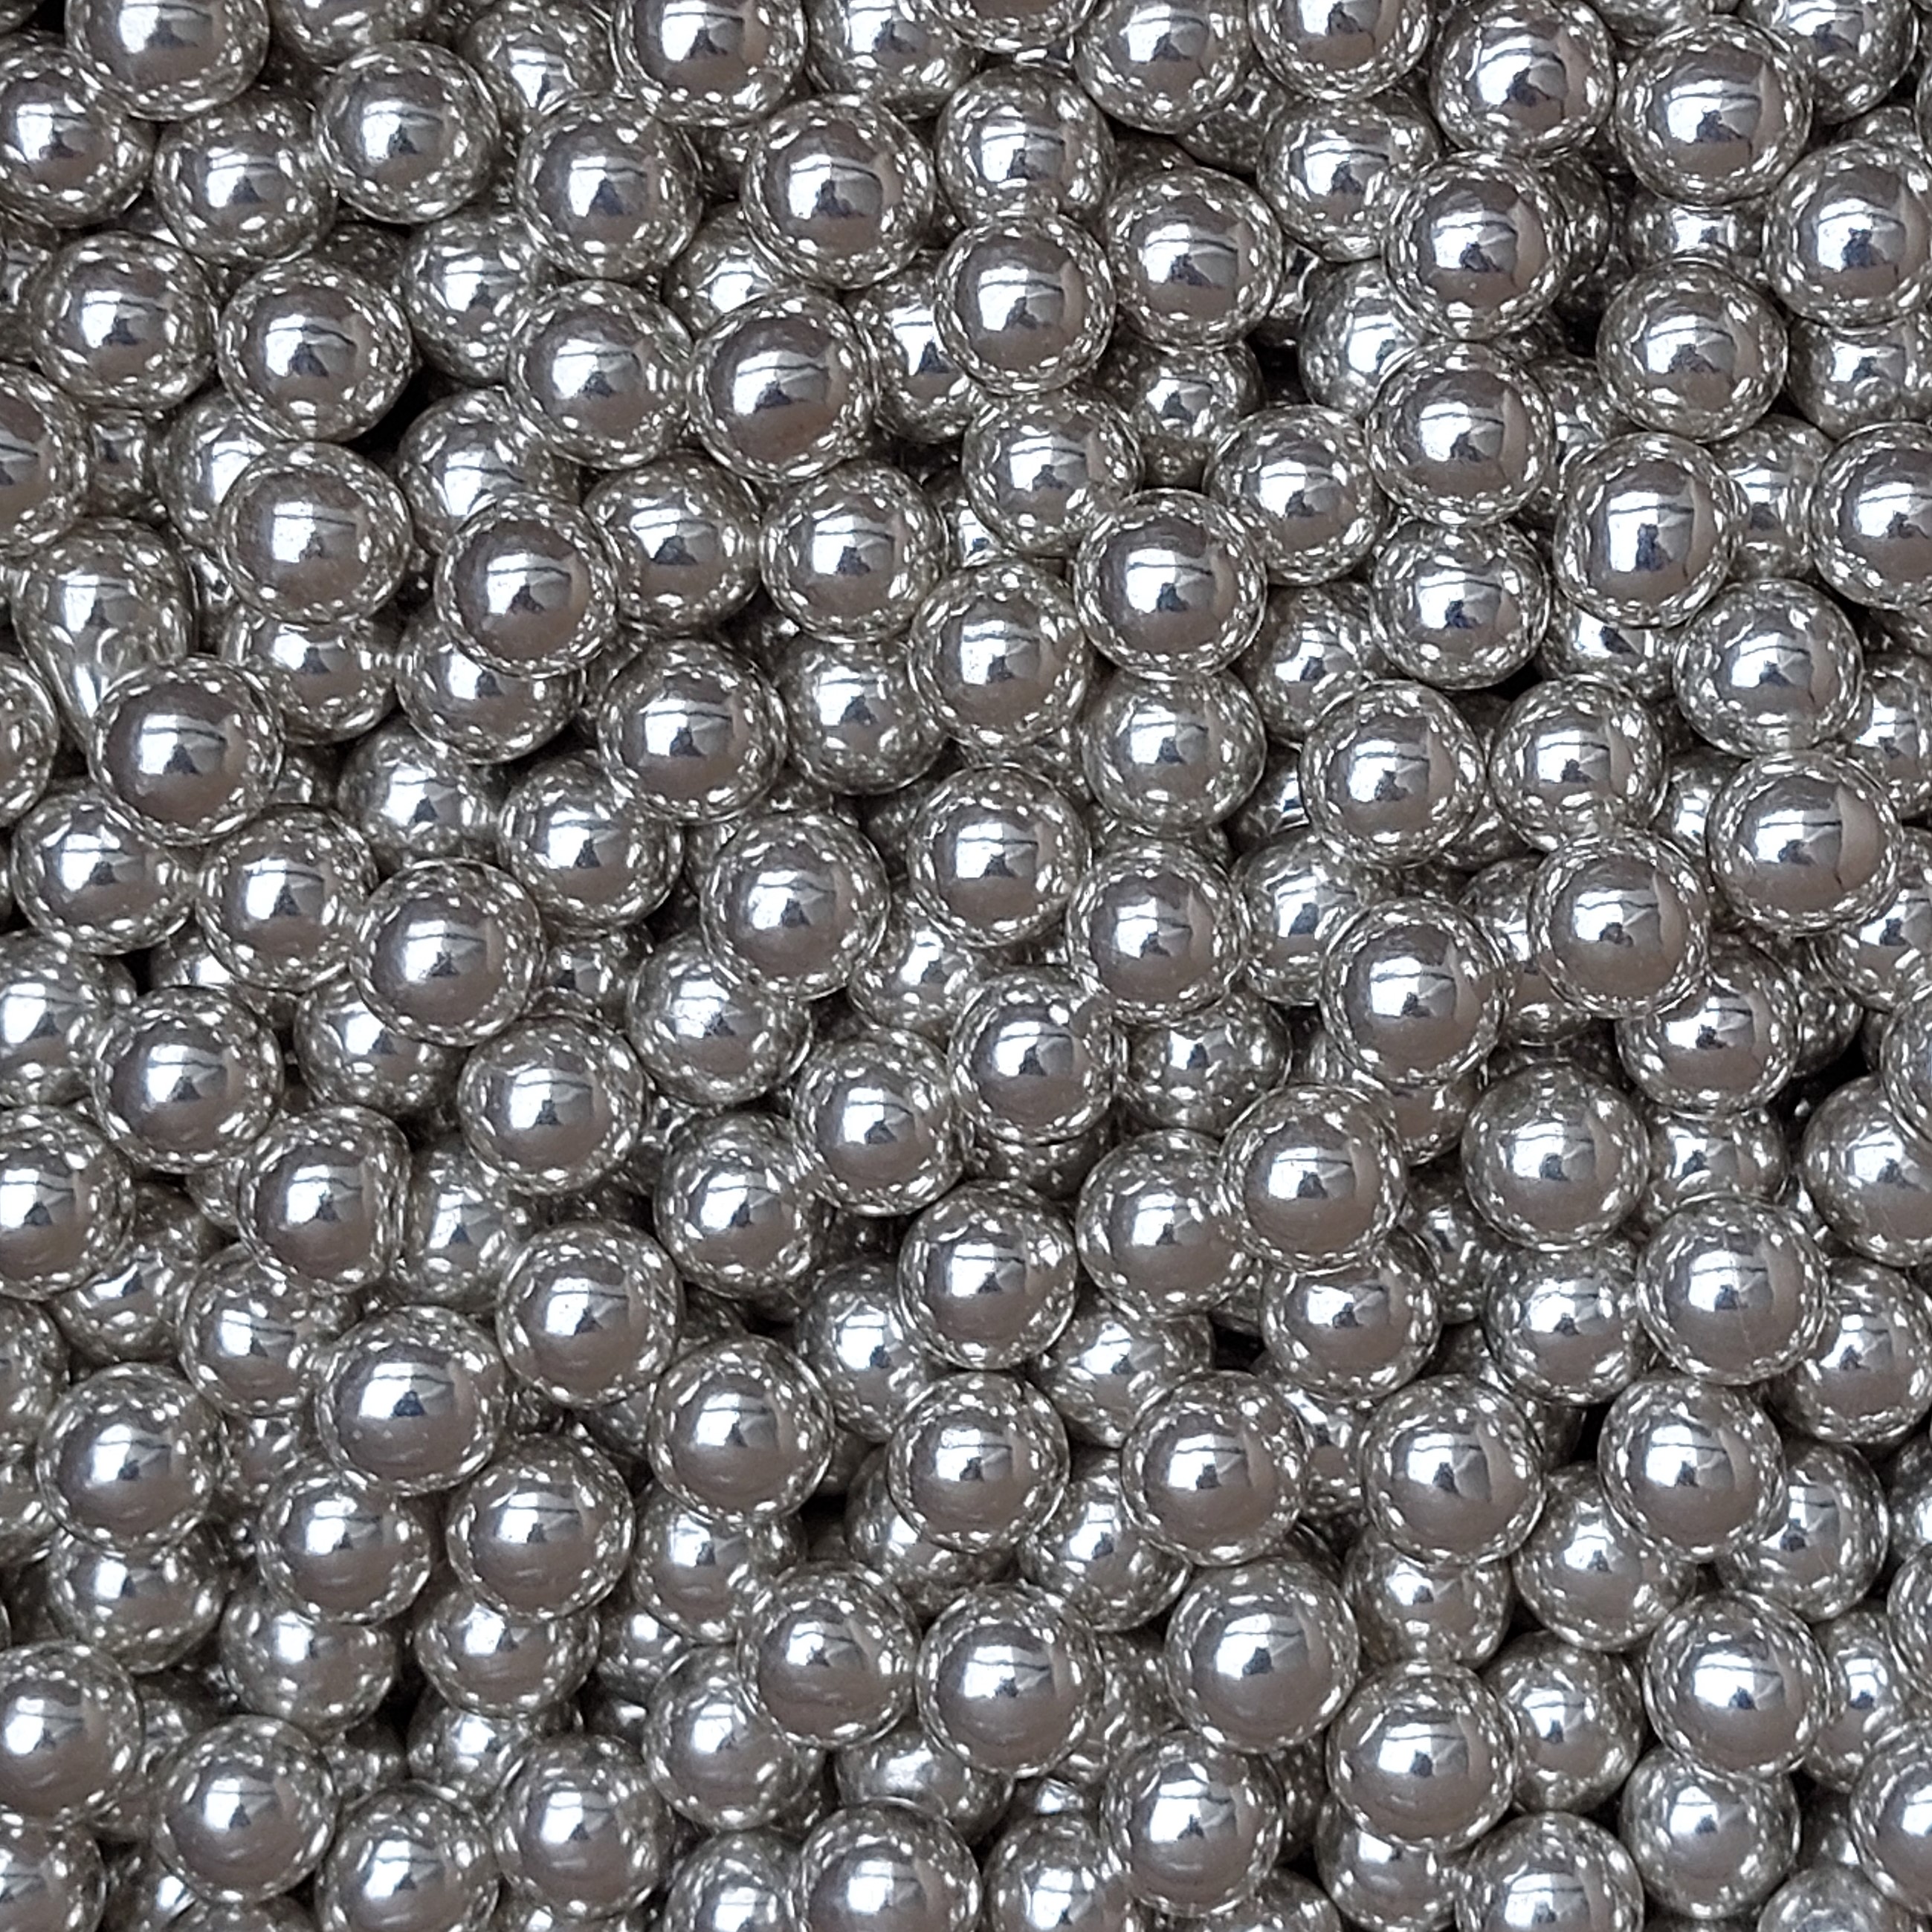 Chocolate balls silver